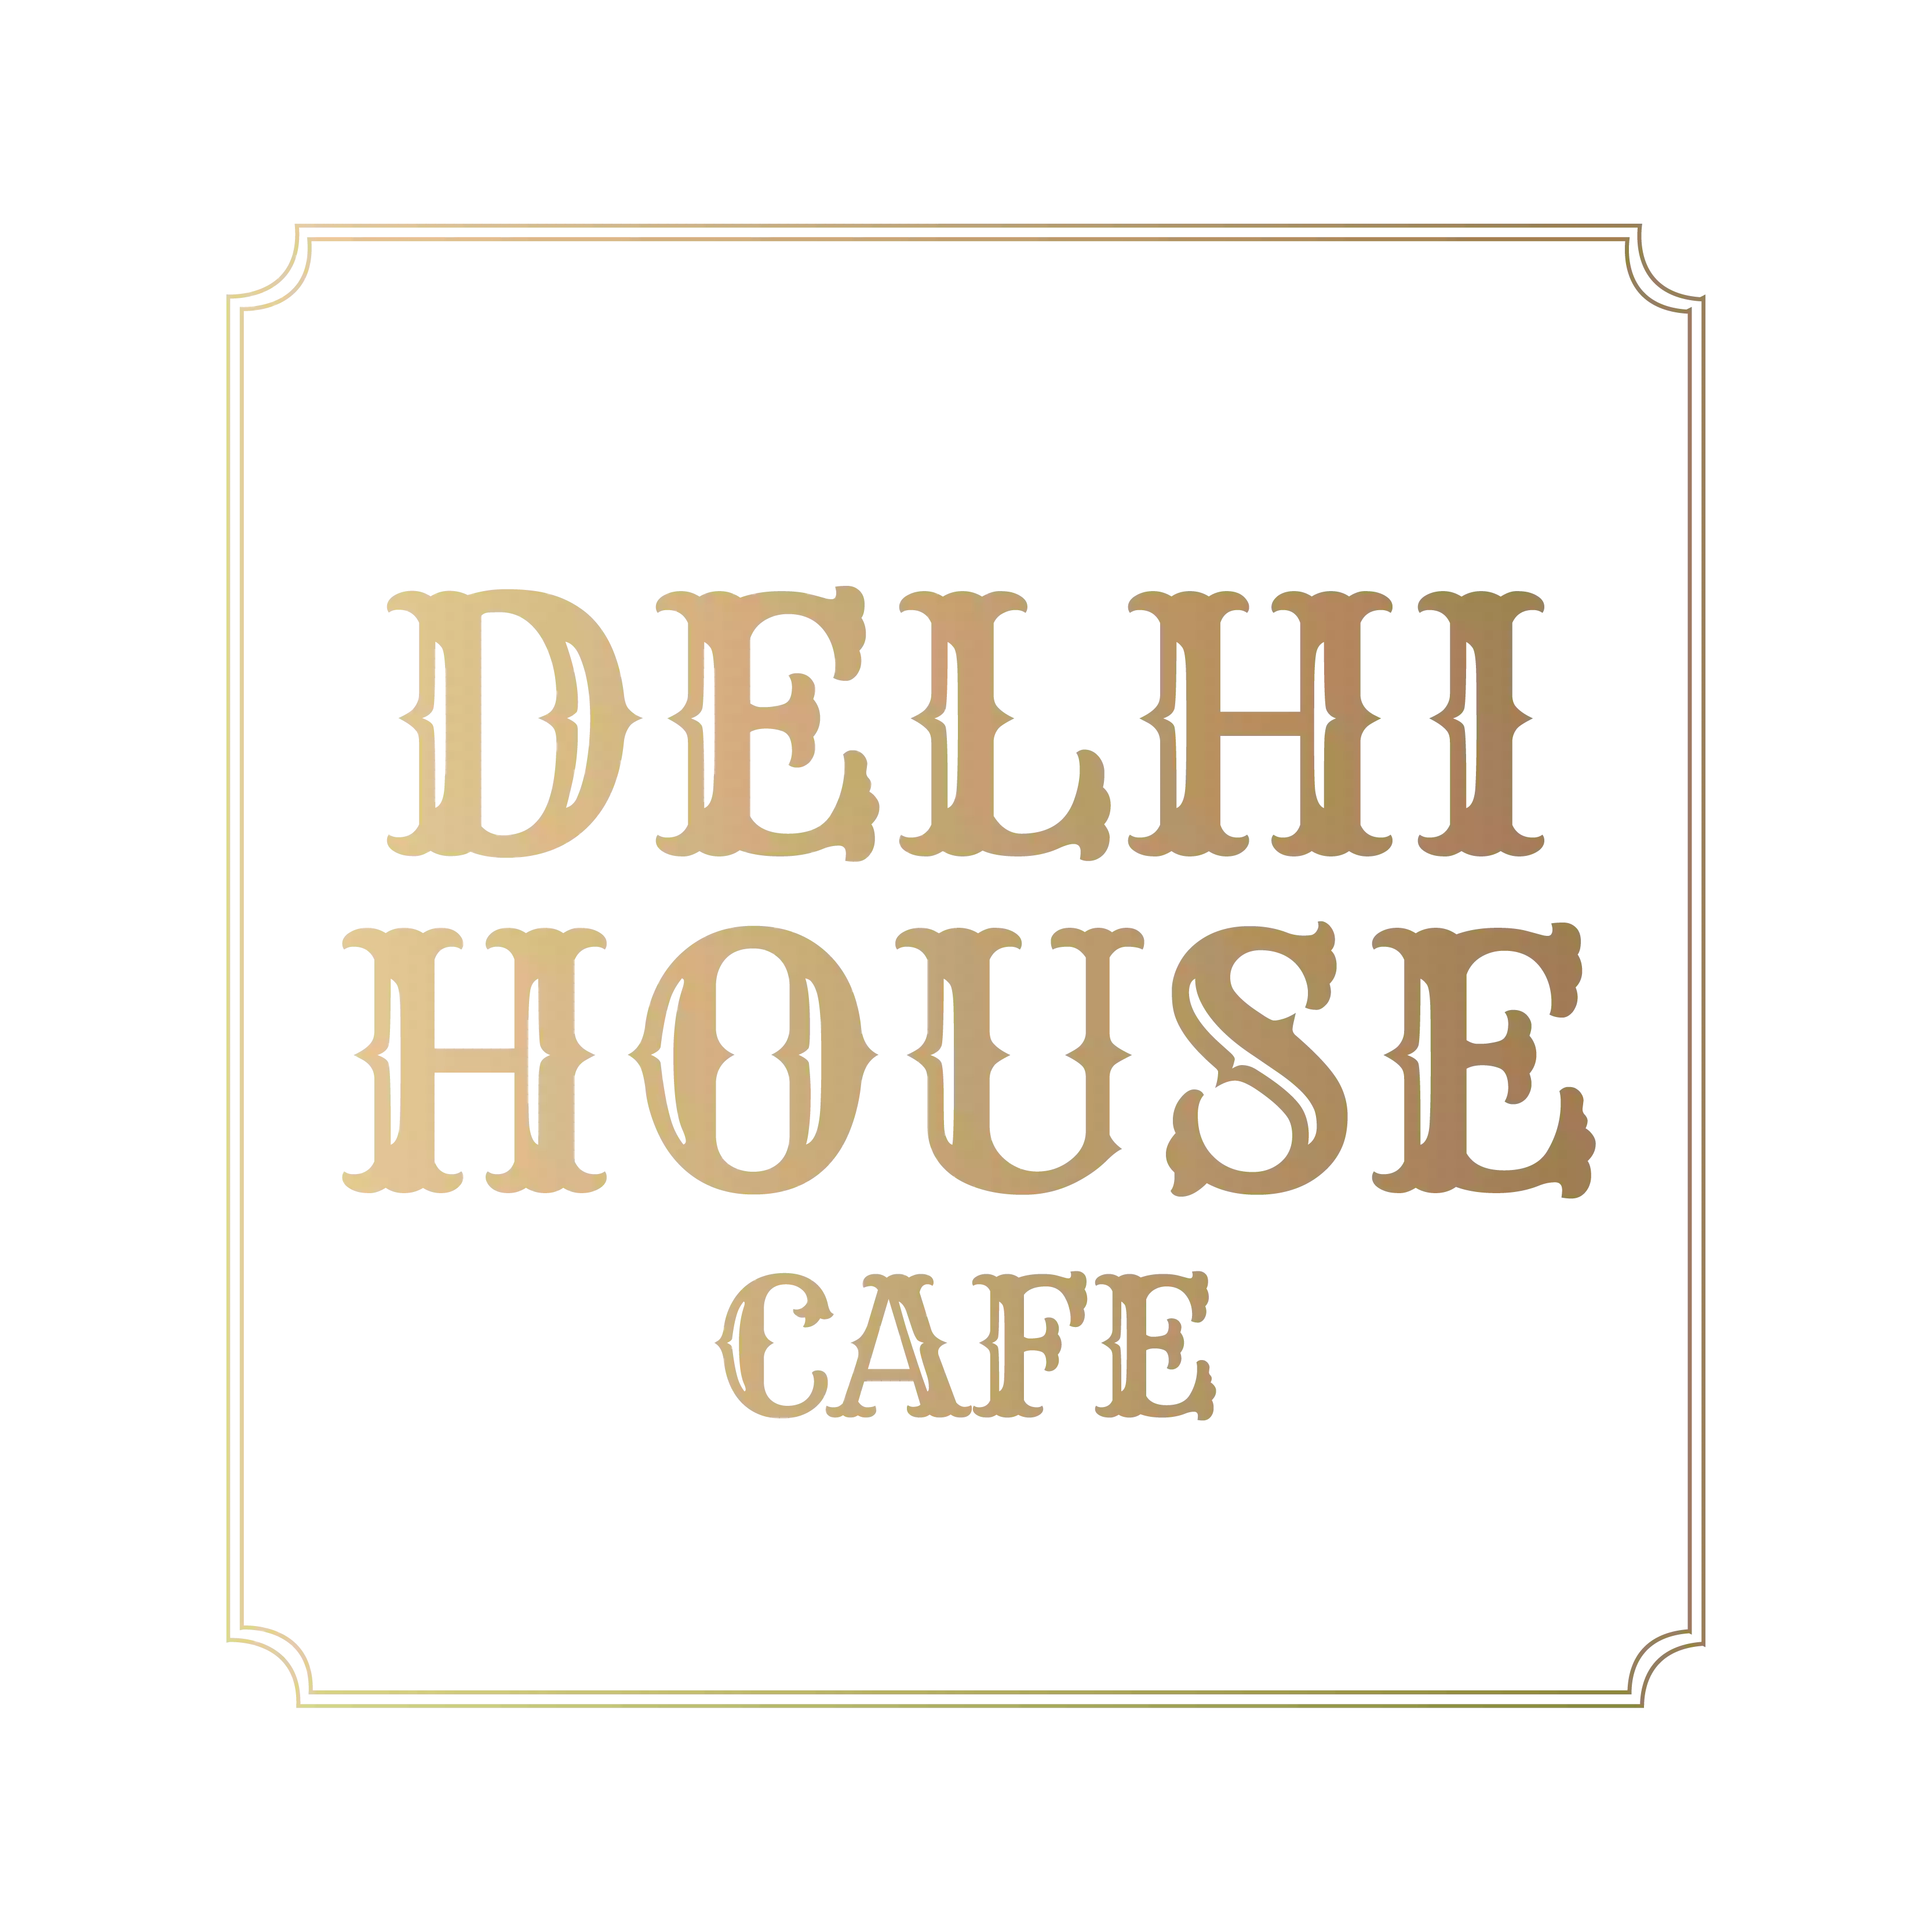 Delhi House Cafe